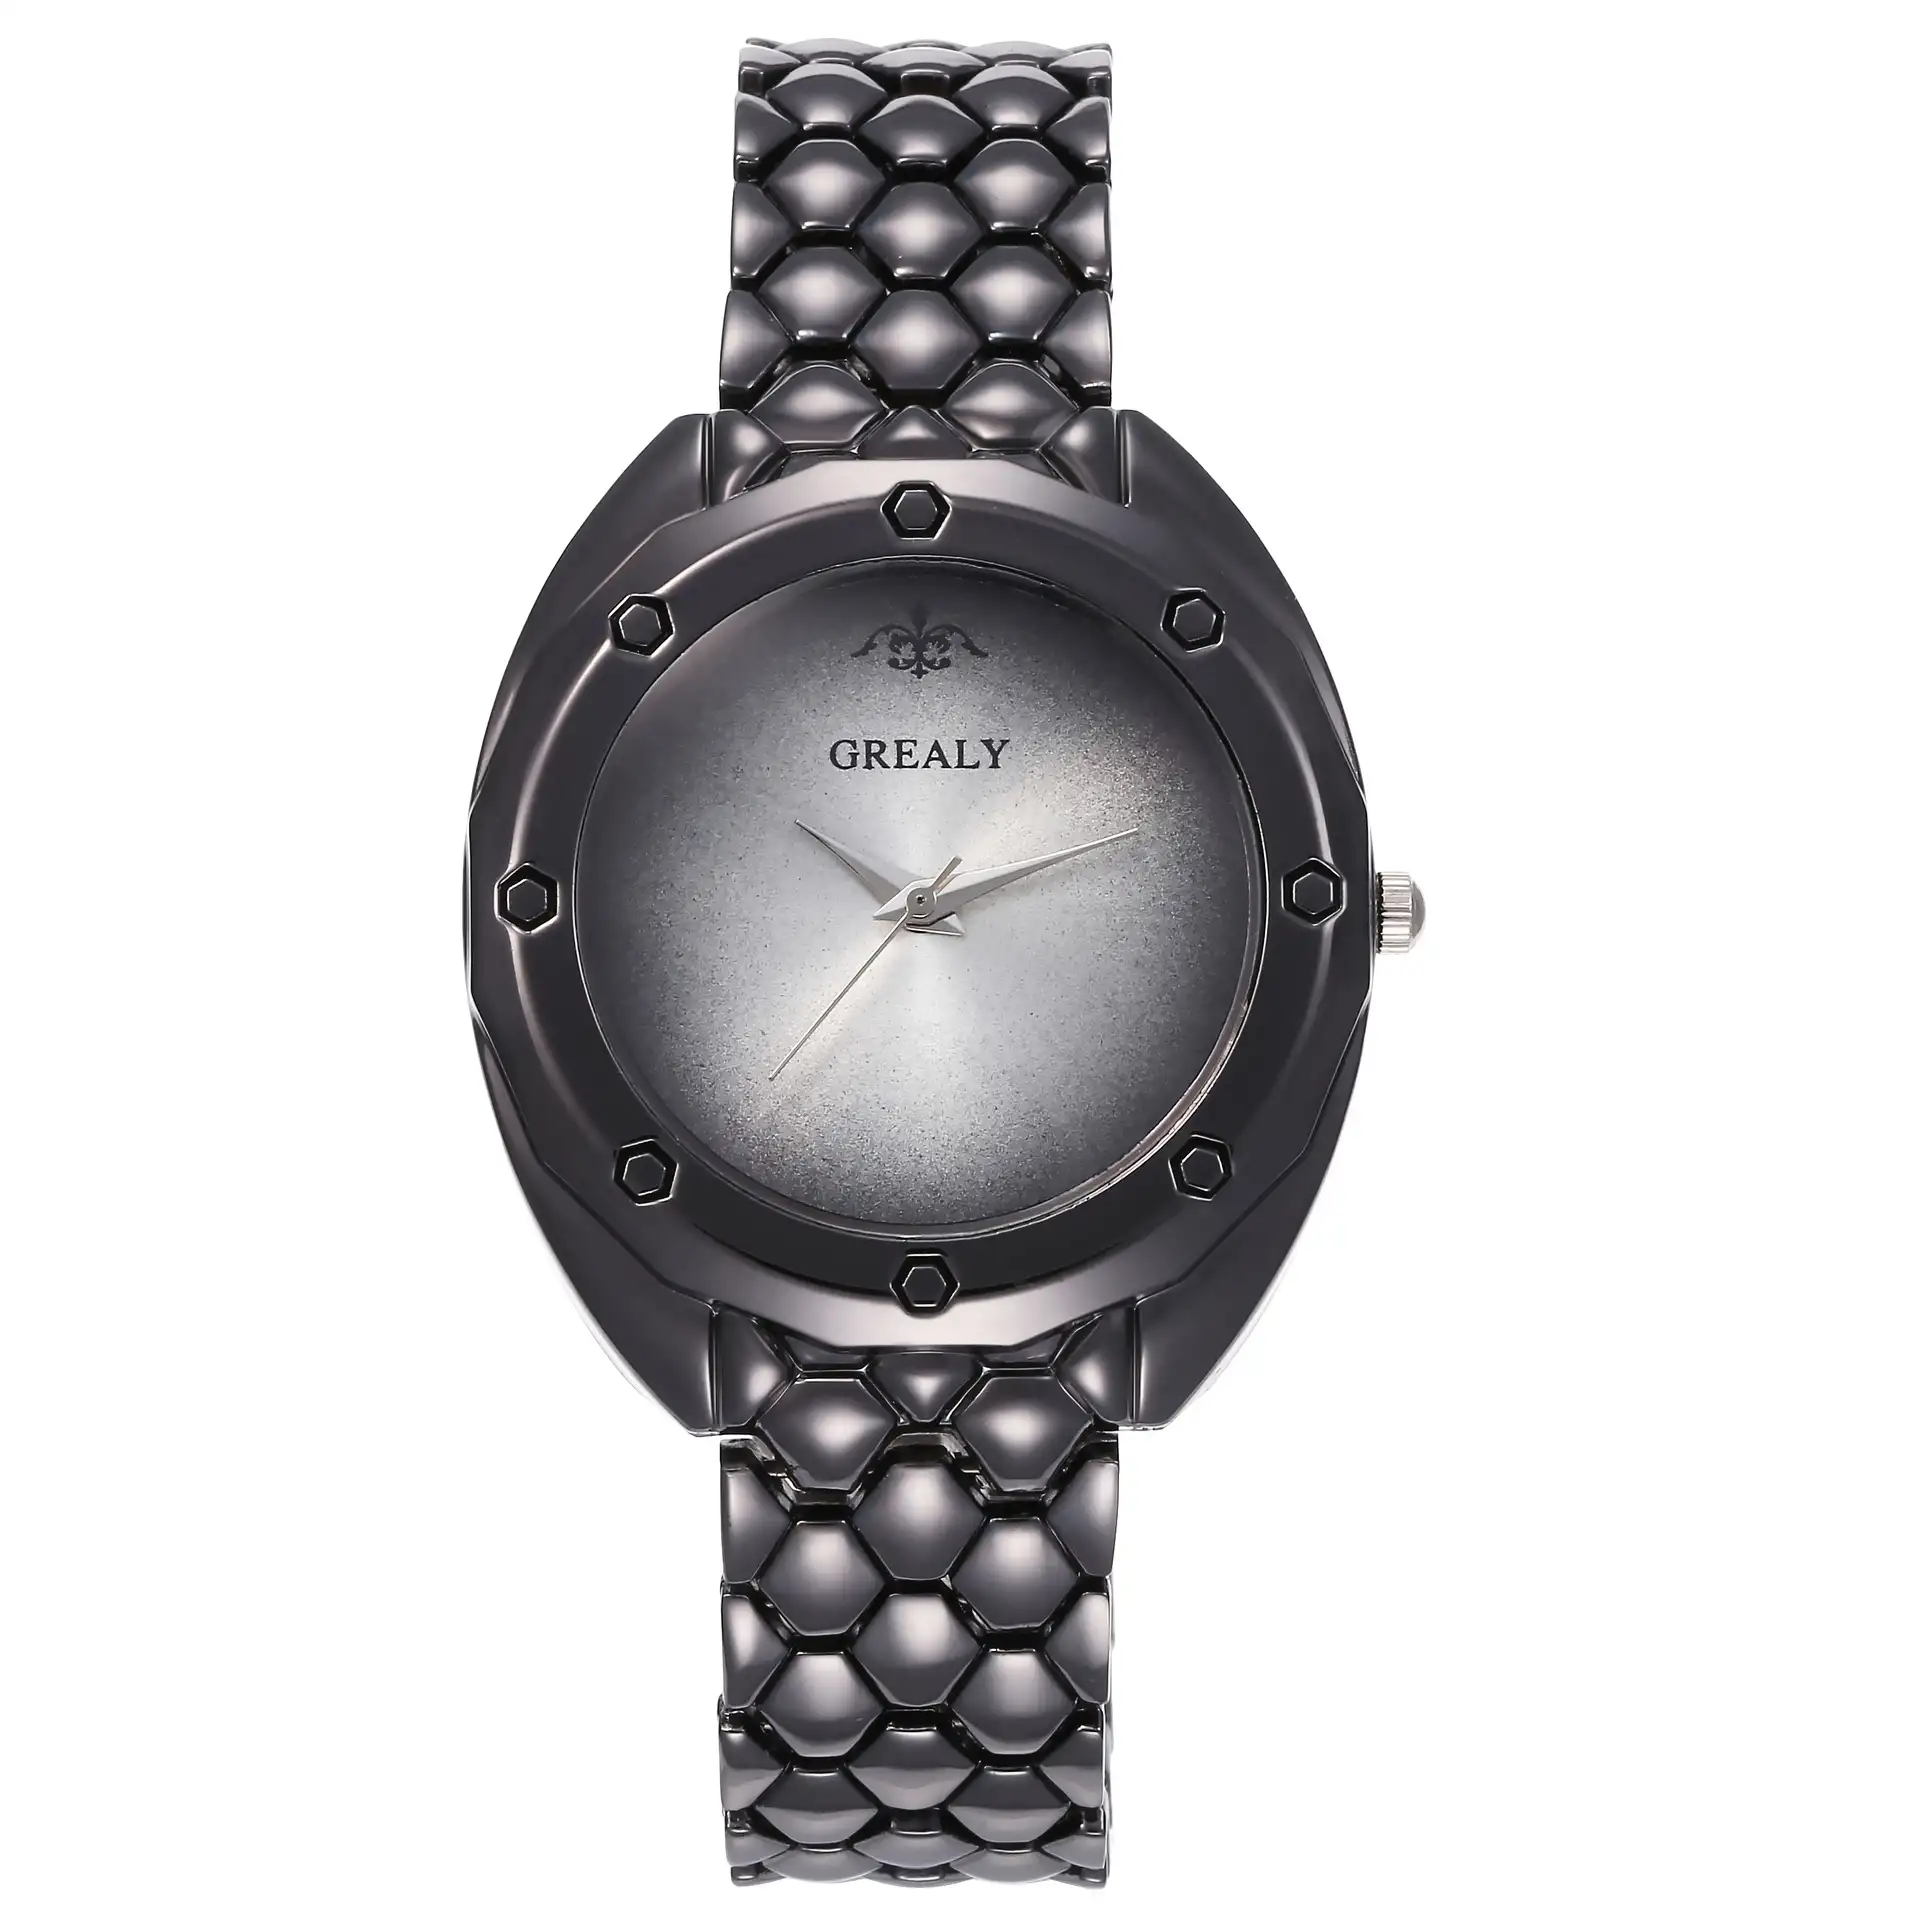 Fashion casual business men's quartz watch personality watch head alloy steel belt